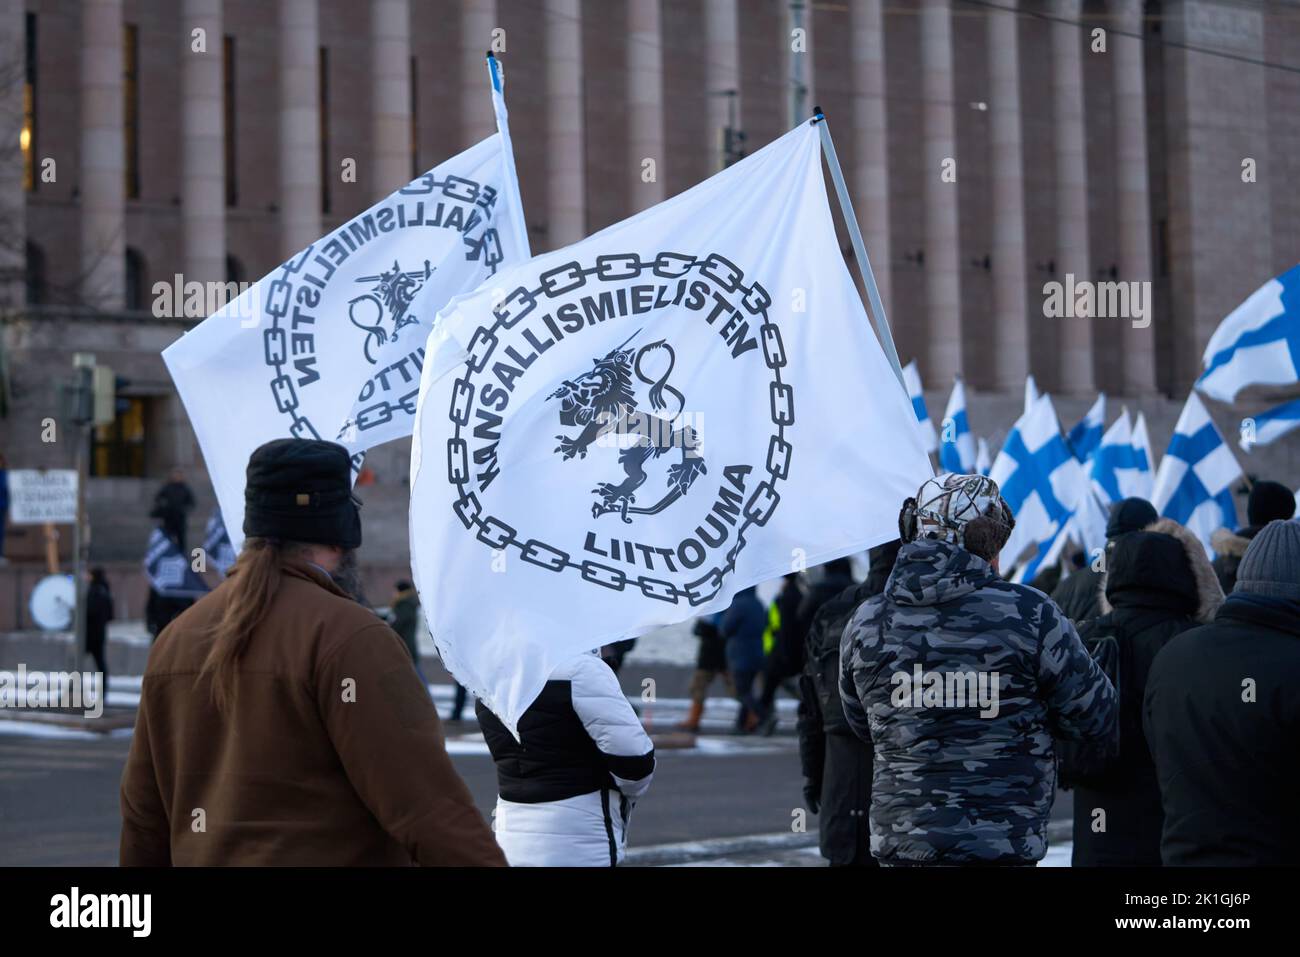 Helsinki, Finland - December 6, 2021: Demonstrators carrying Kansallismielisten liittouma (Nationalists alliance) flags at the far-right ethnonational Stock Photo